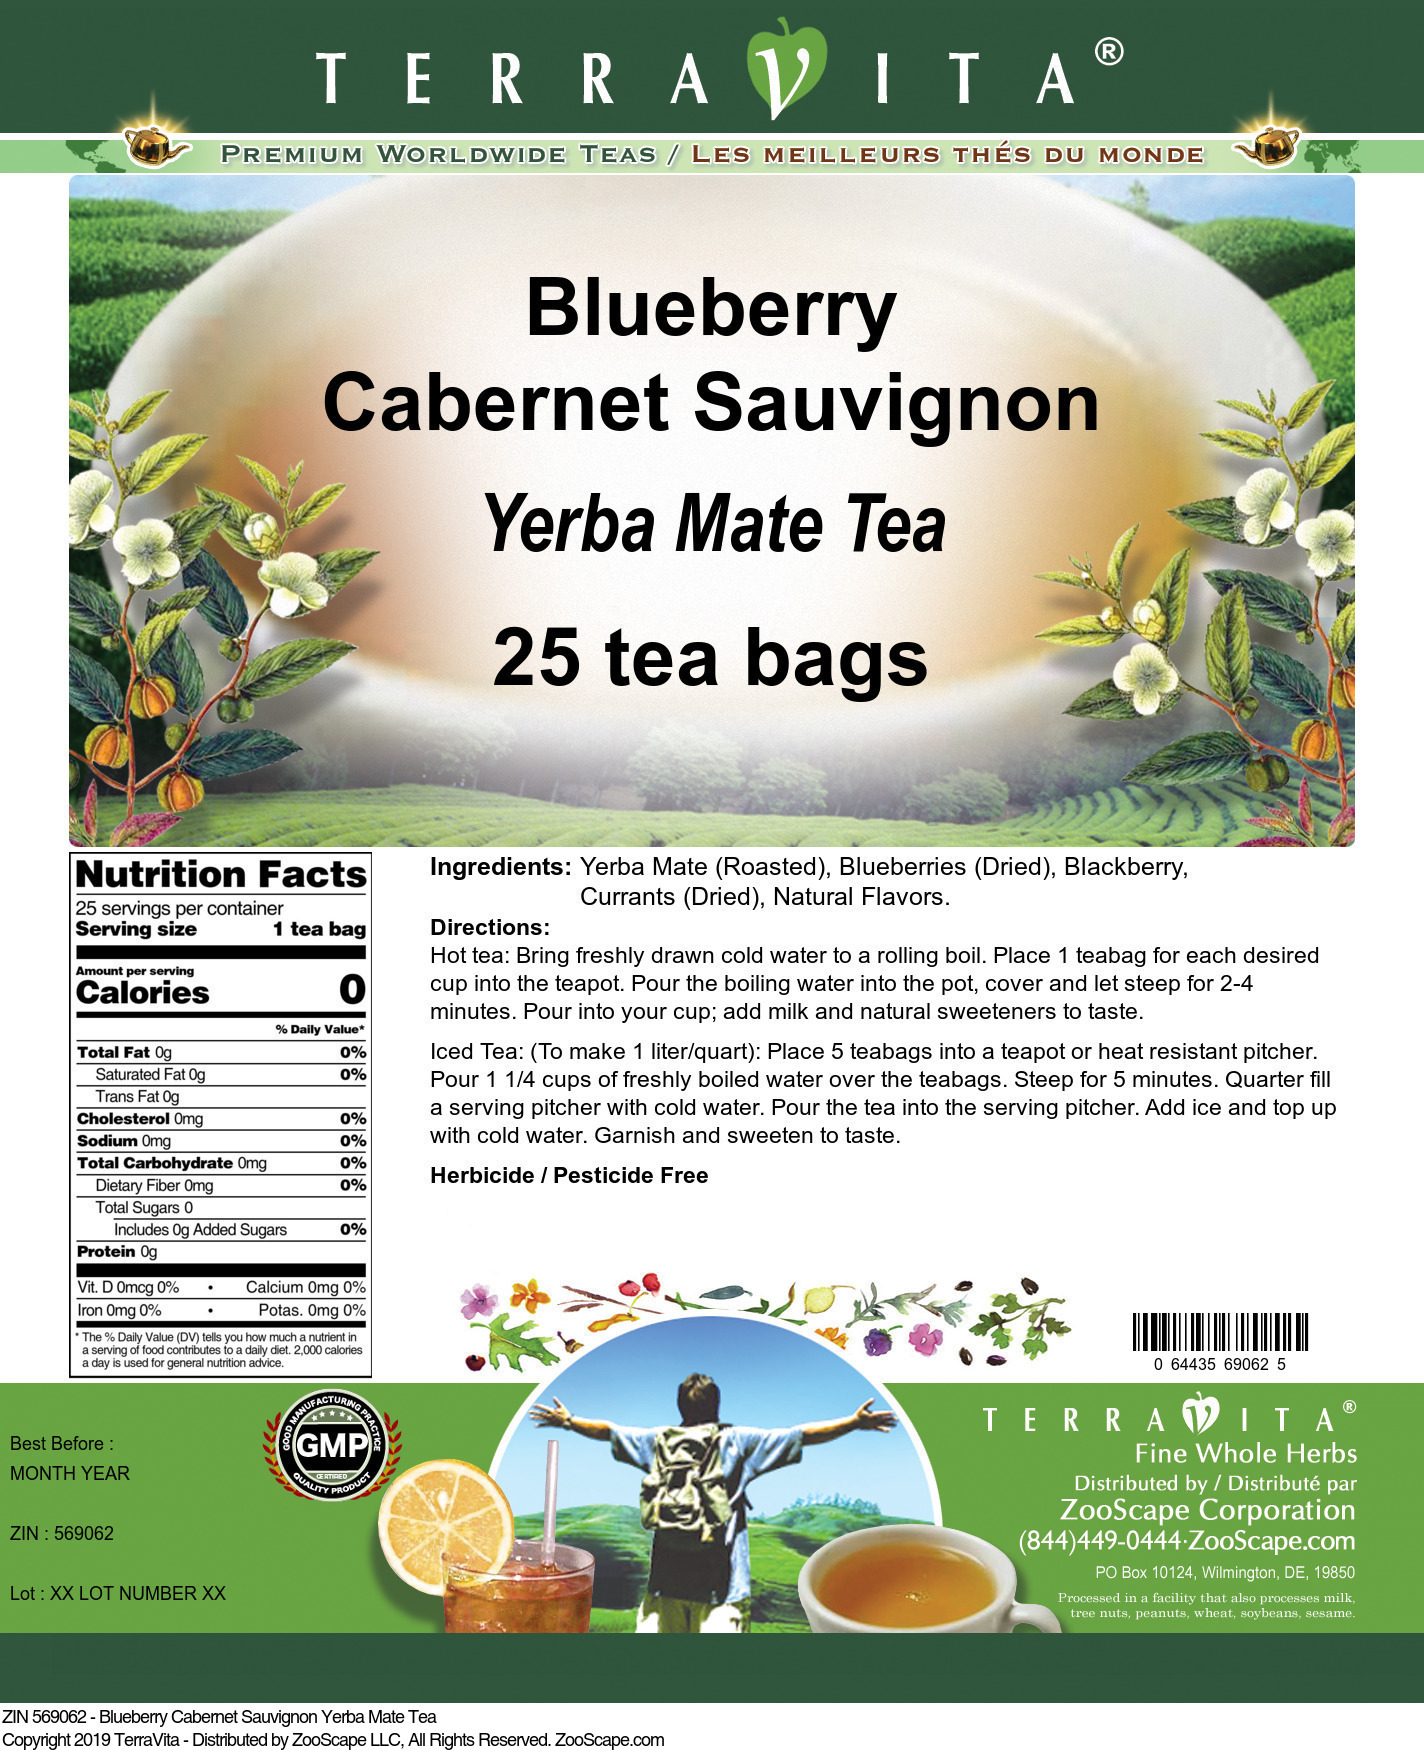 Blueberry Cabernet Sauvignon Yerba Mate Tea - Label